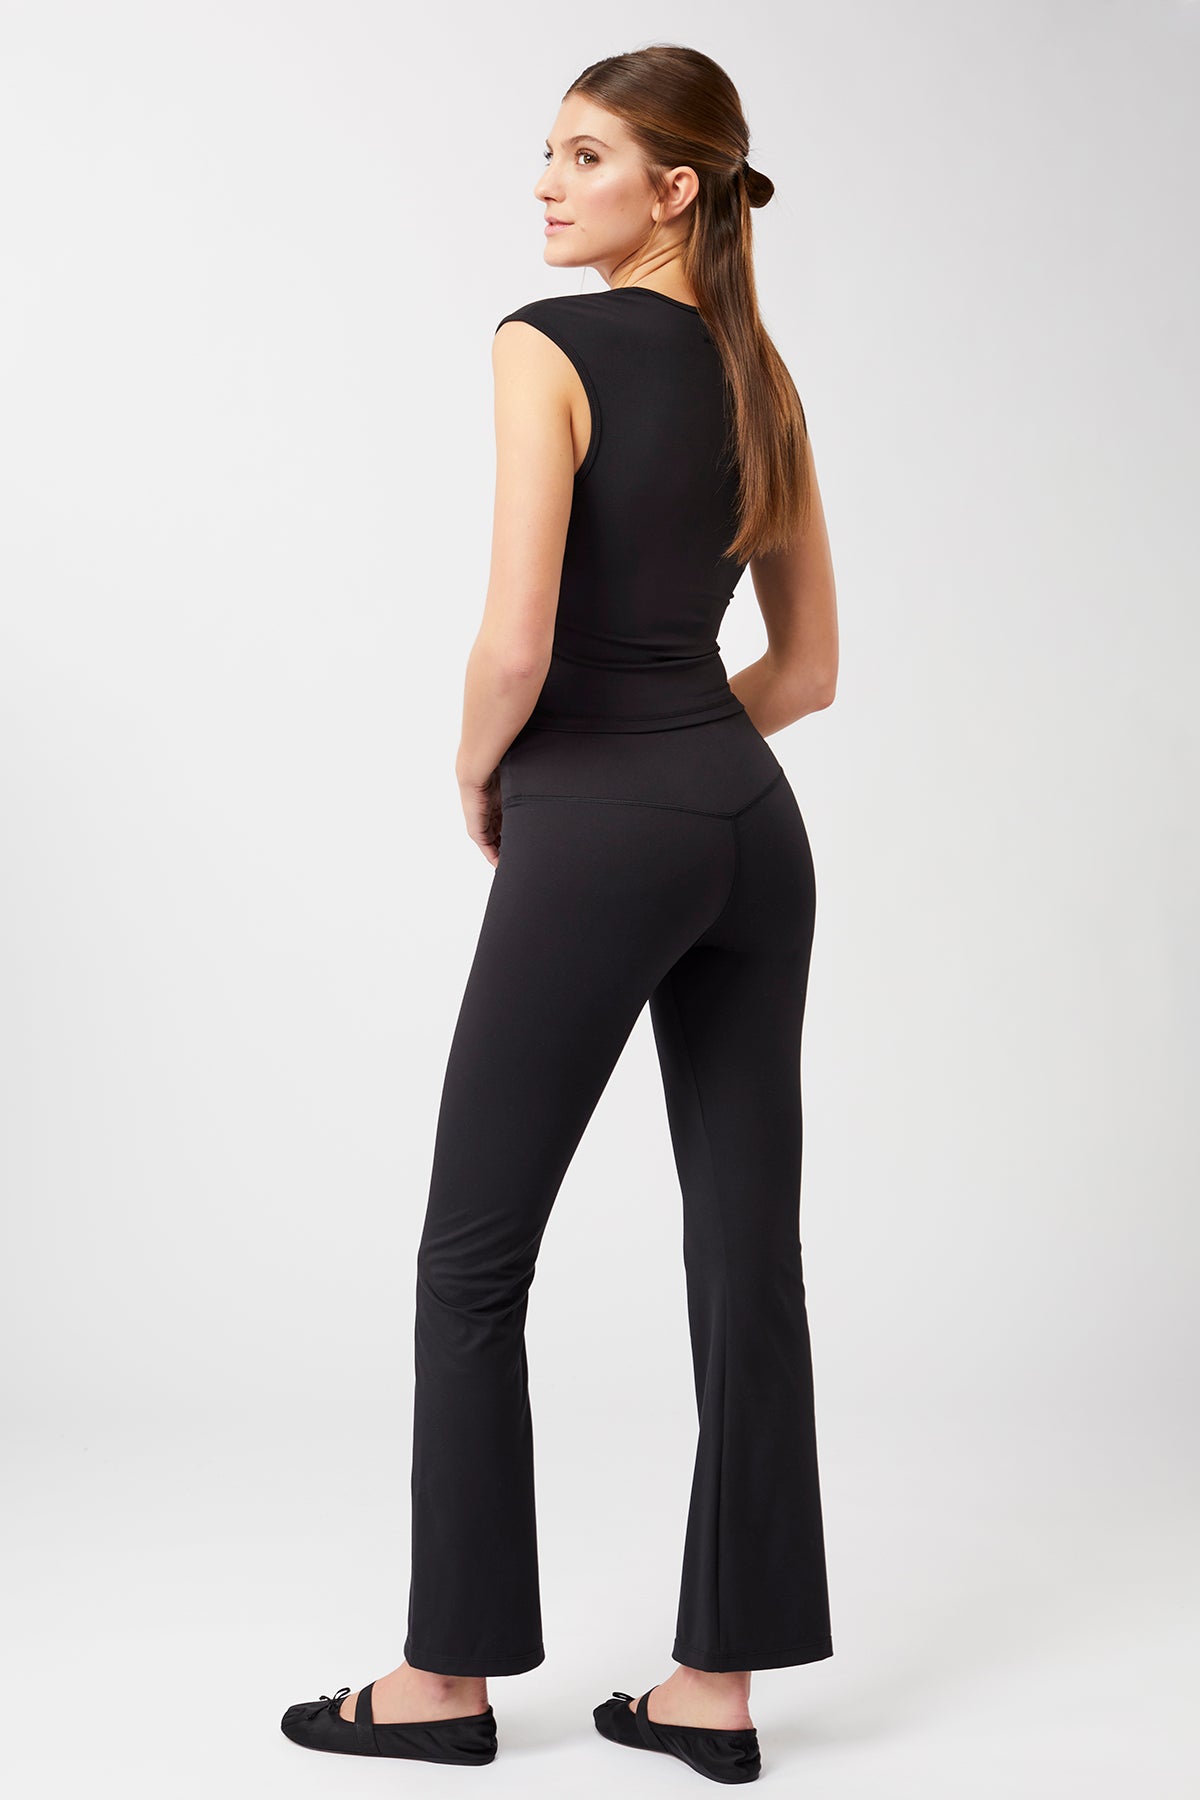 Mandala Yoga Top Schwarz Outfit Rückseite - Basic Top